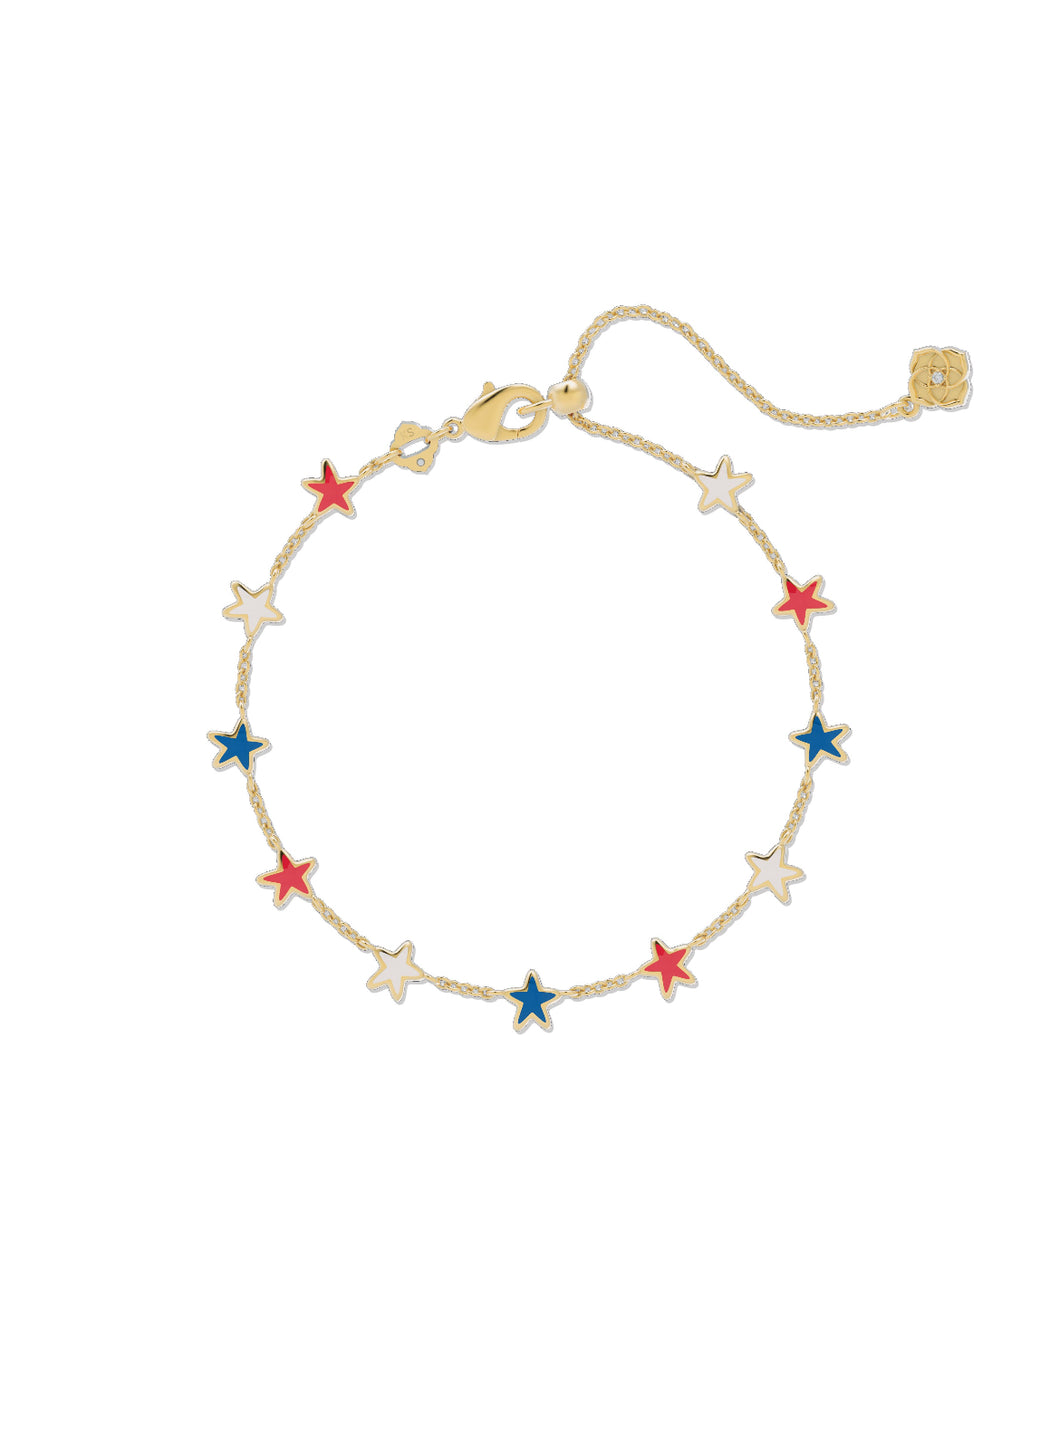 Kendra Scott: Sierra Star Delicate Chain Bracelet in Gold Red White Blue Mix